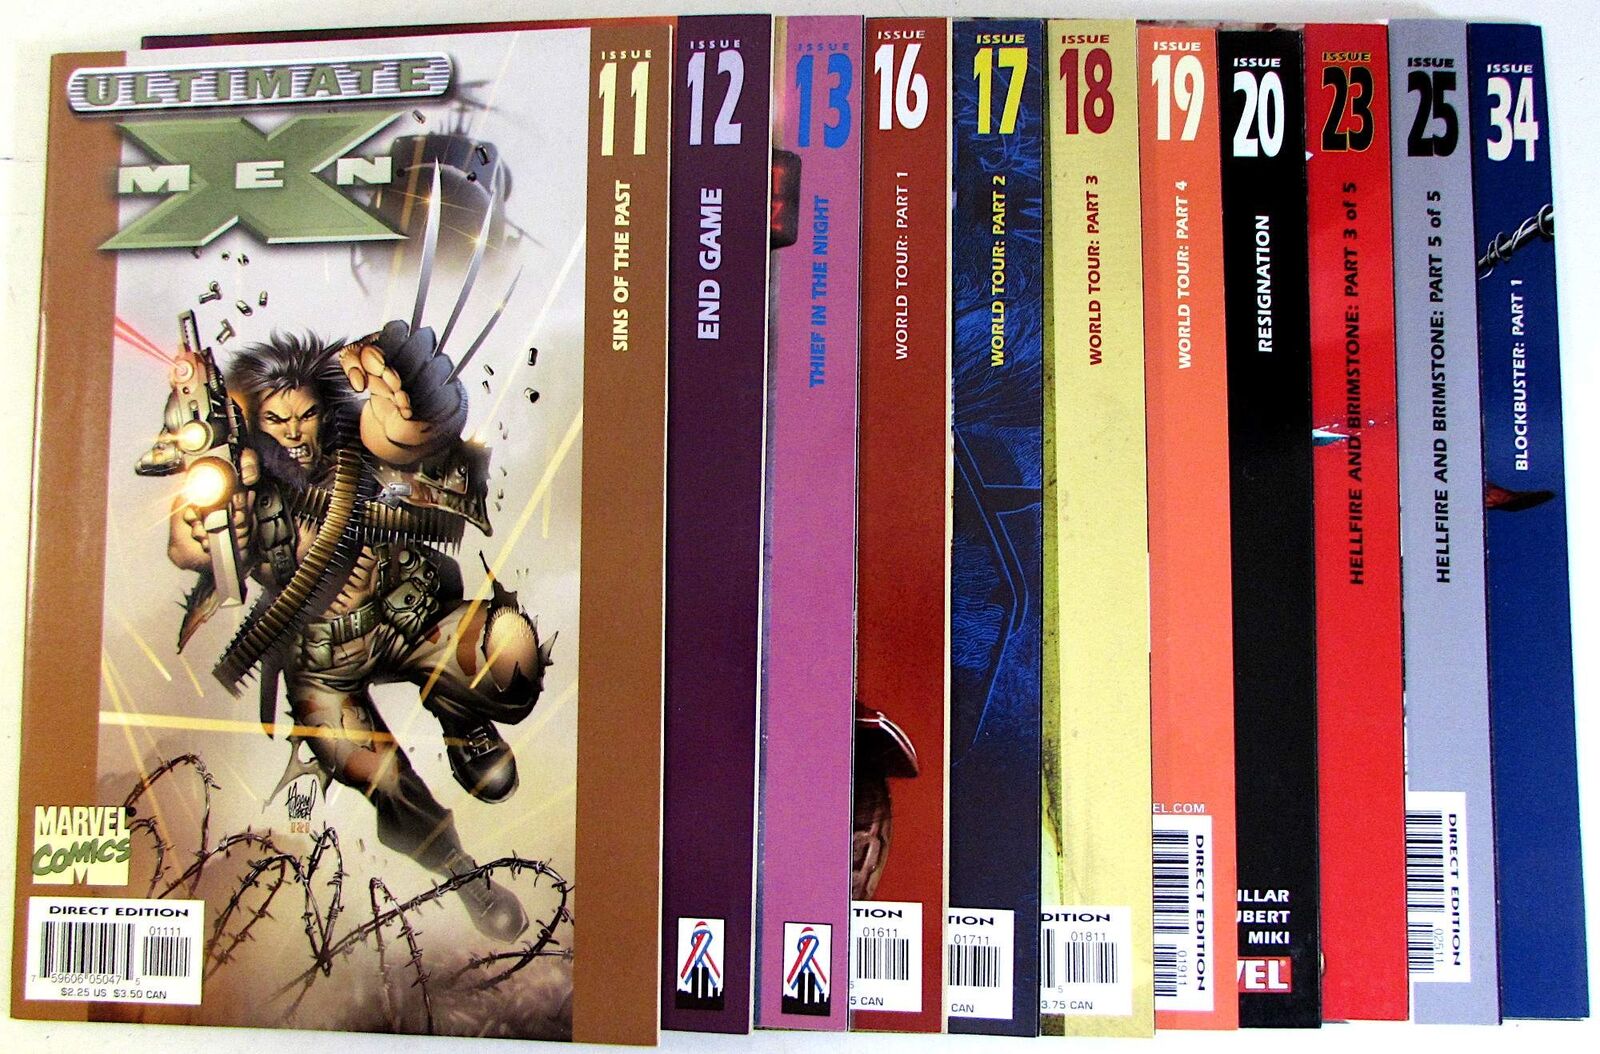 Ultimate X-Men Lot of 11 #11,12,13,16,17,18,19,20,23,25,34 Marvel (2001) Comics